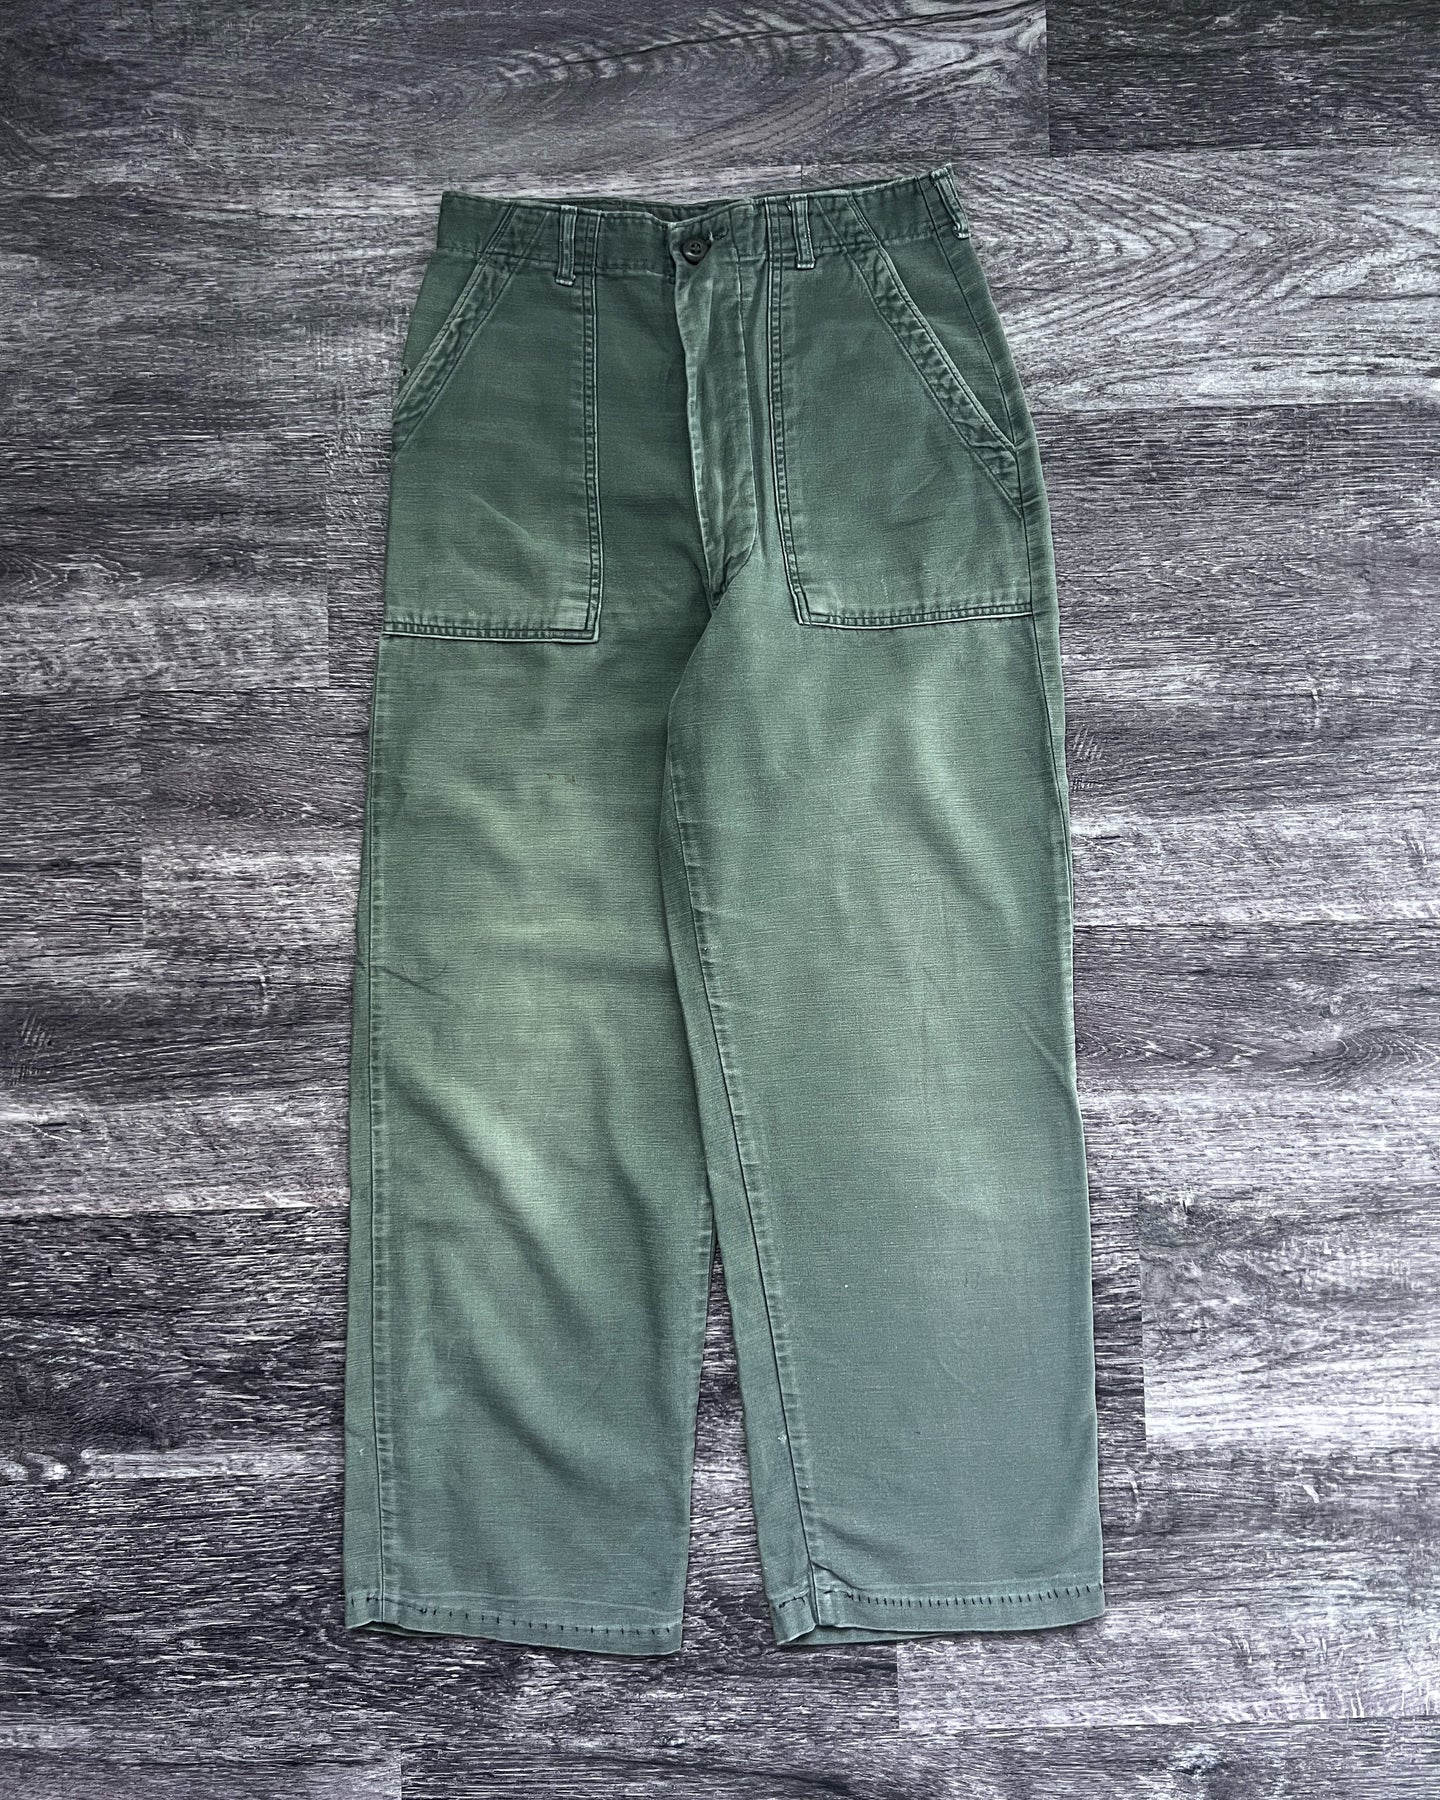 1970s OG-107 Fatigue Pants - Size 28 x 28